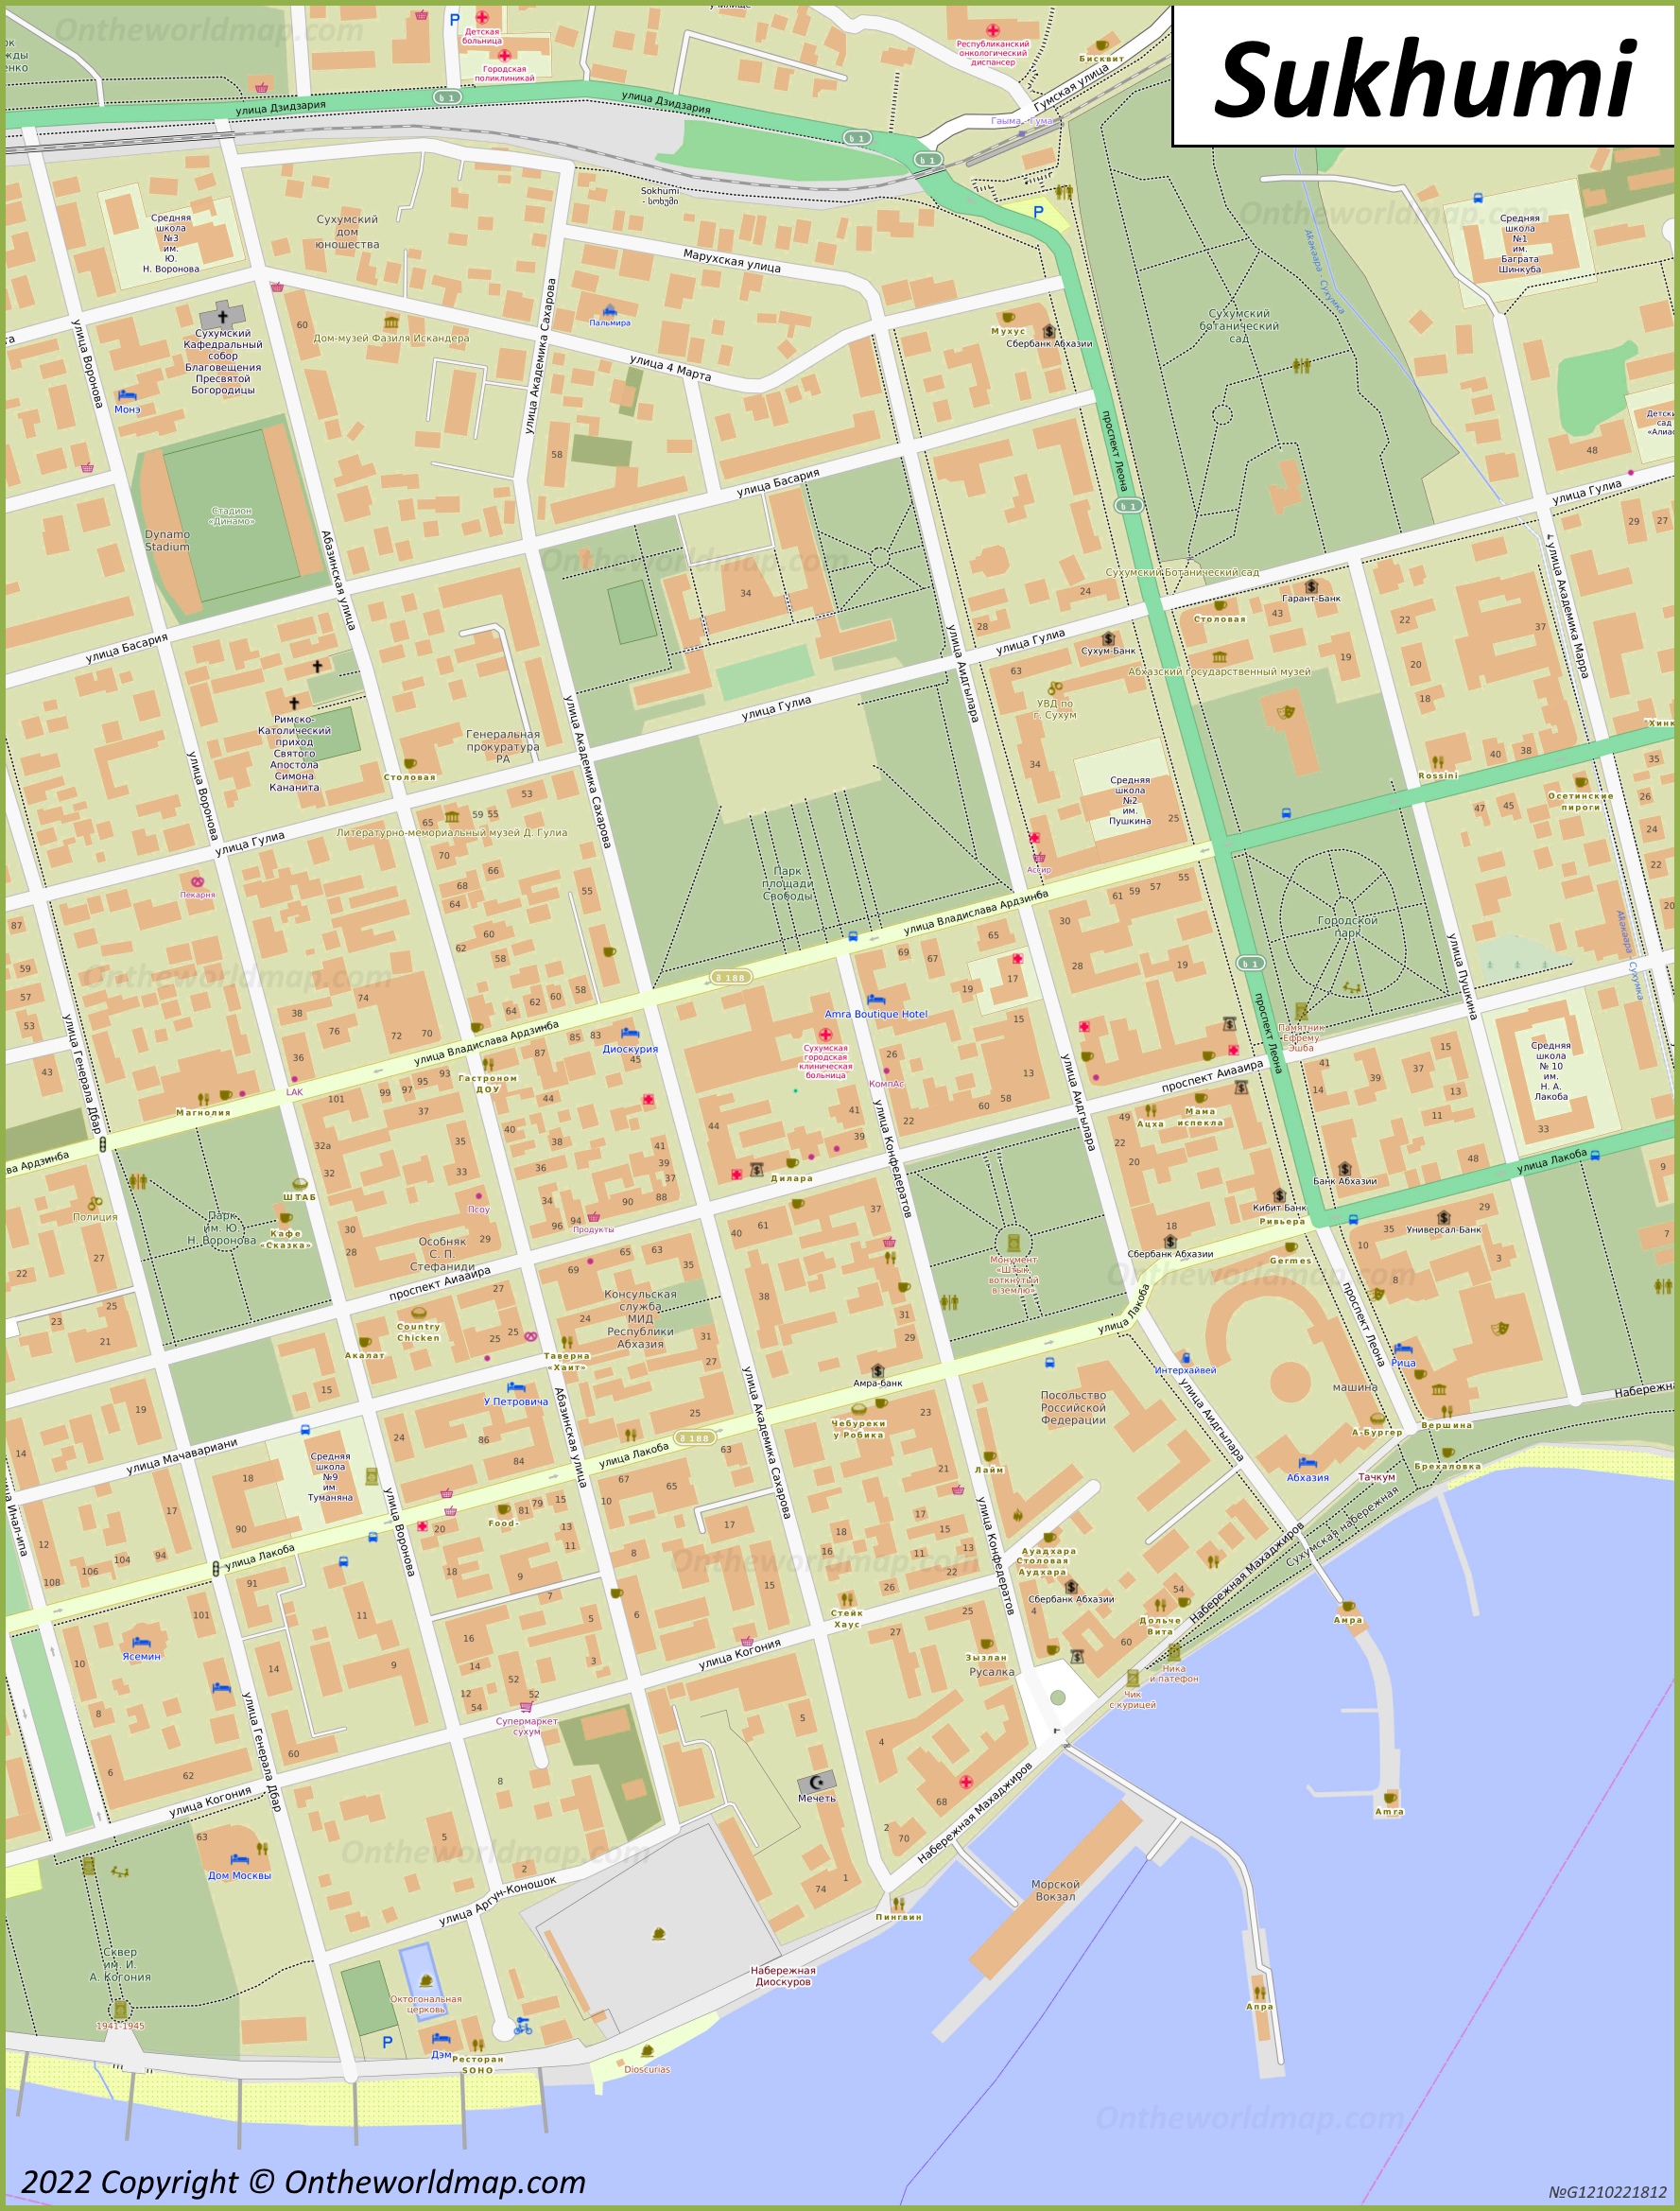 Sukhumi City Centre Map